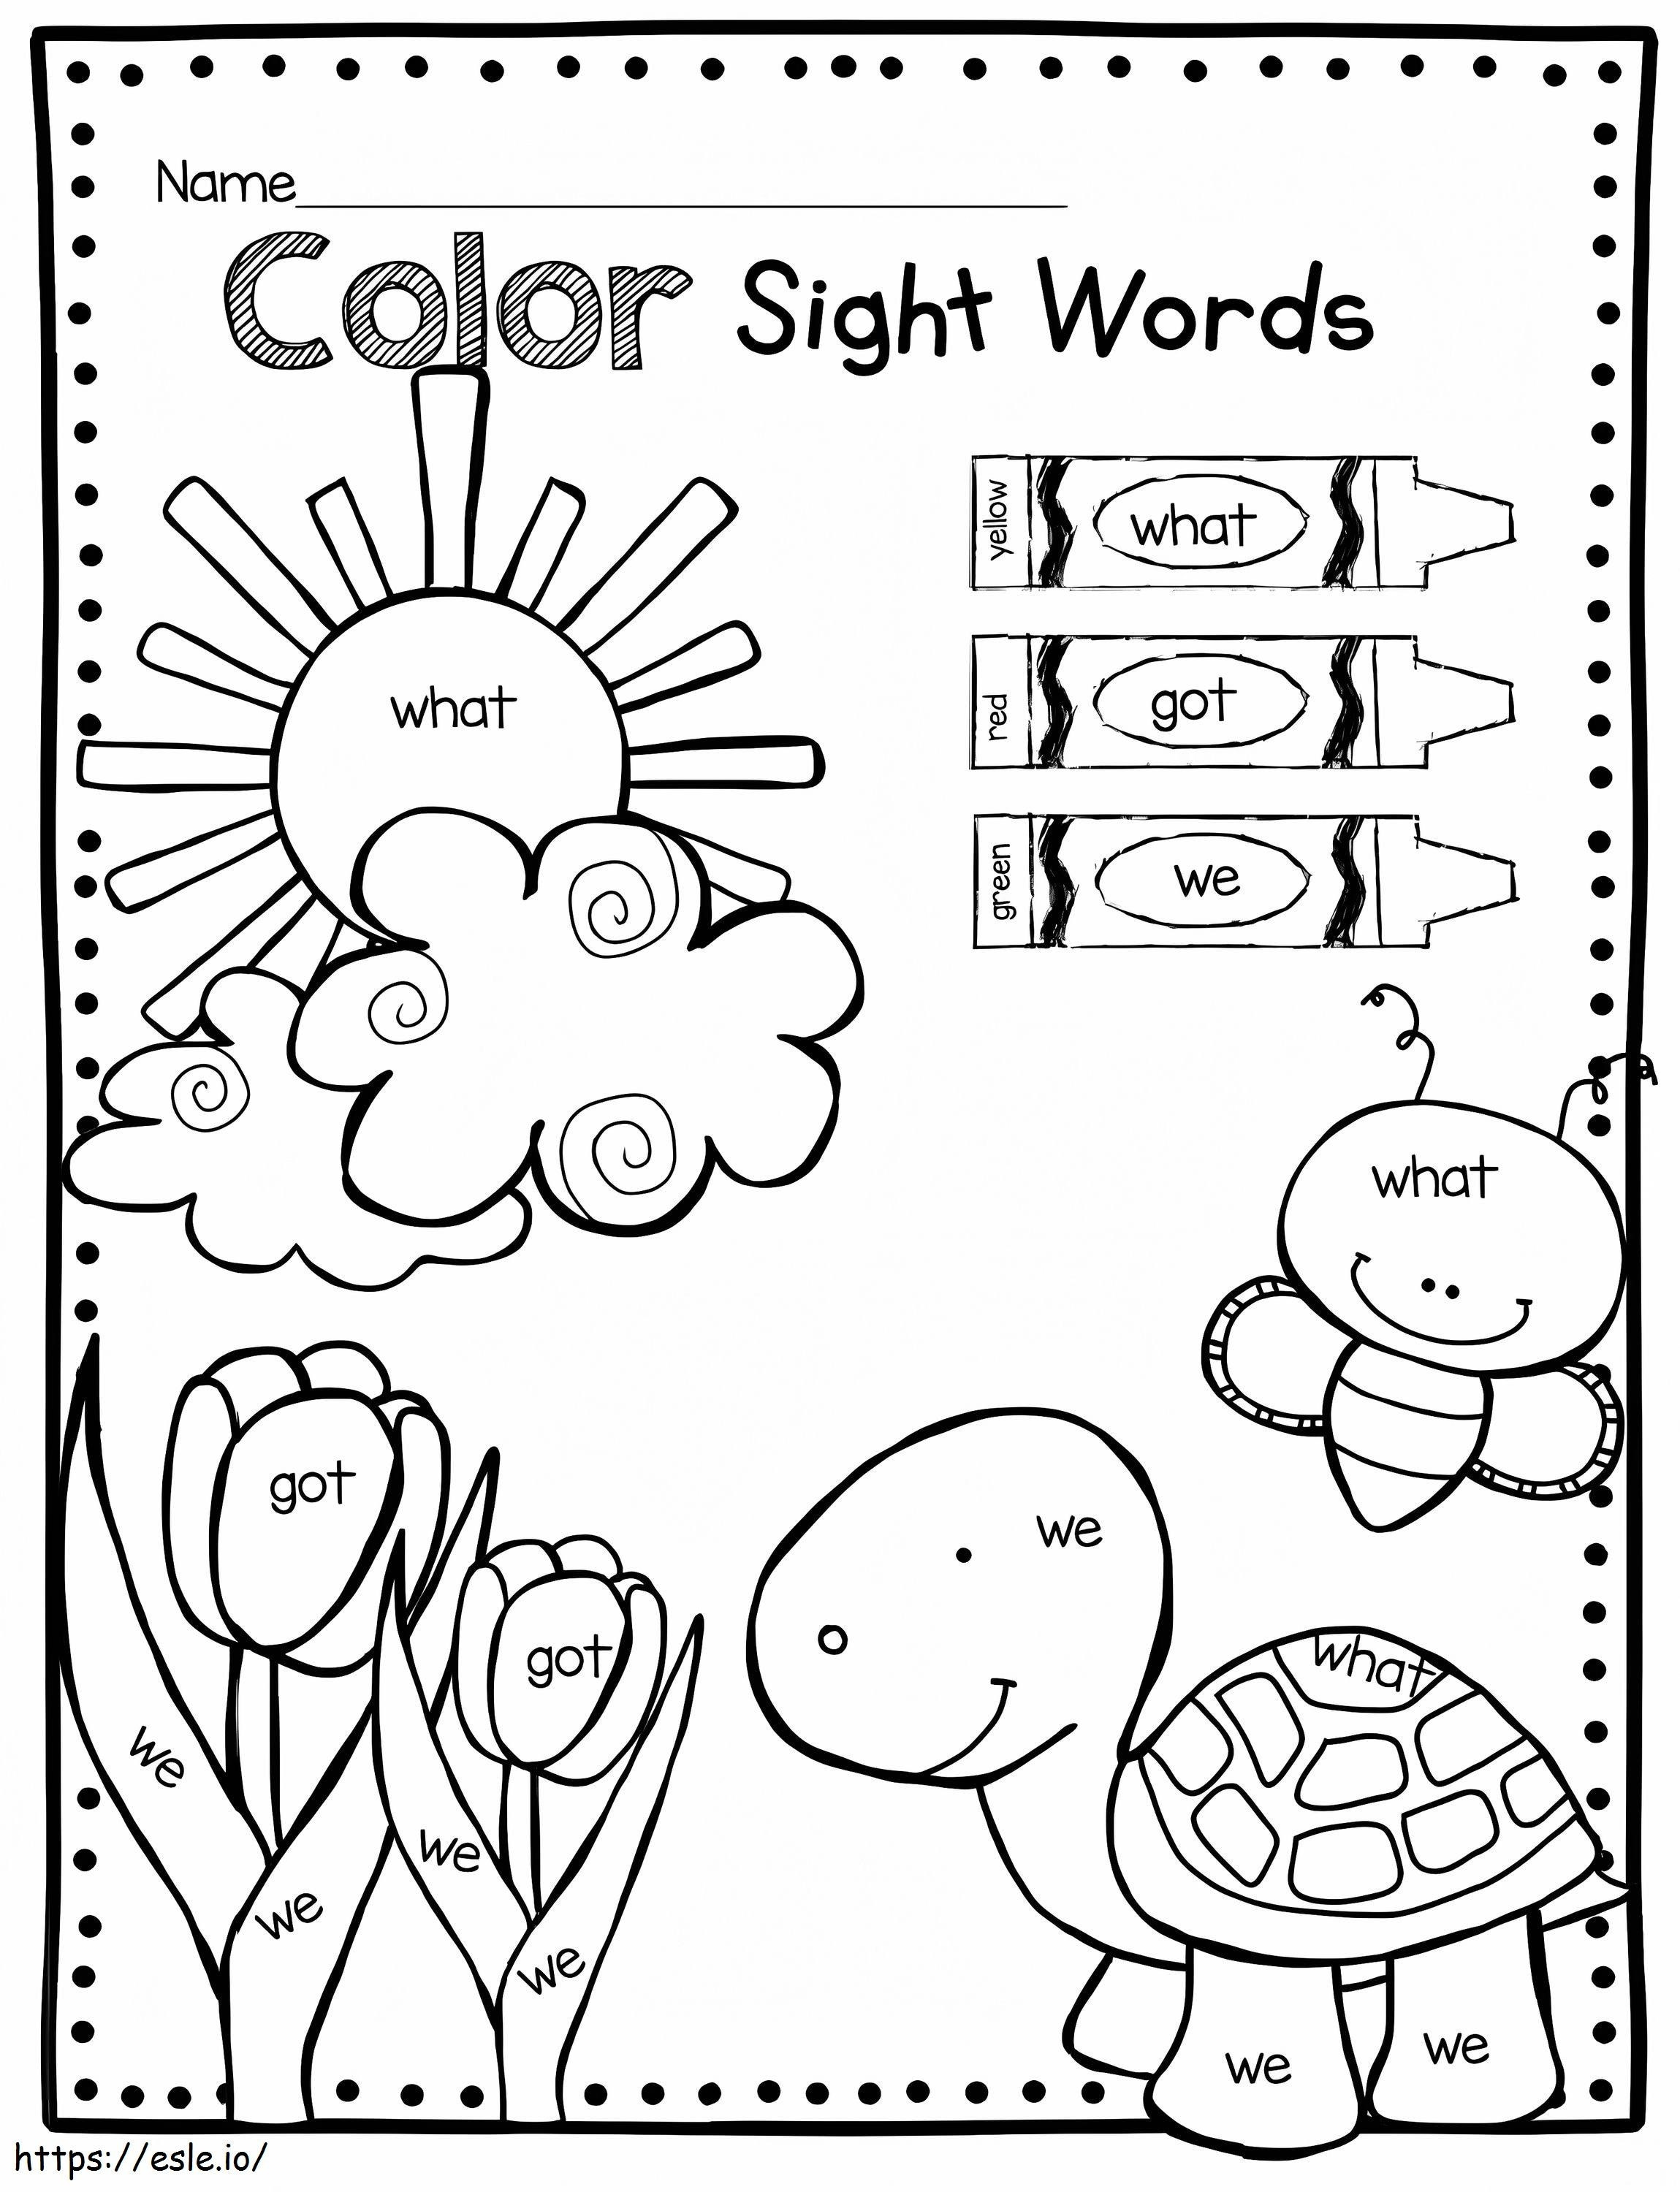 Palabras de vista de tortuga para colorear